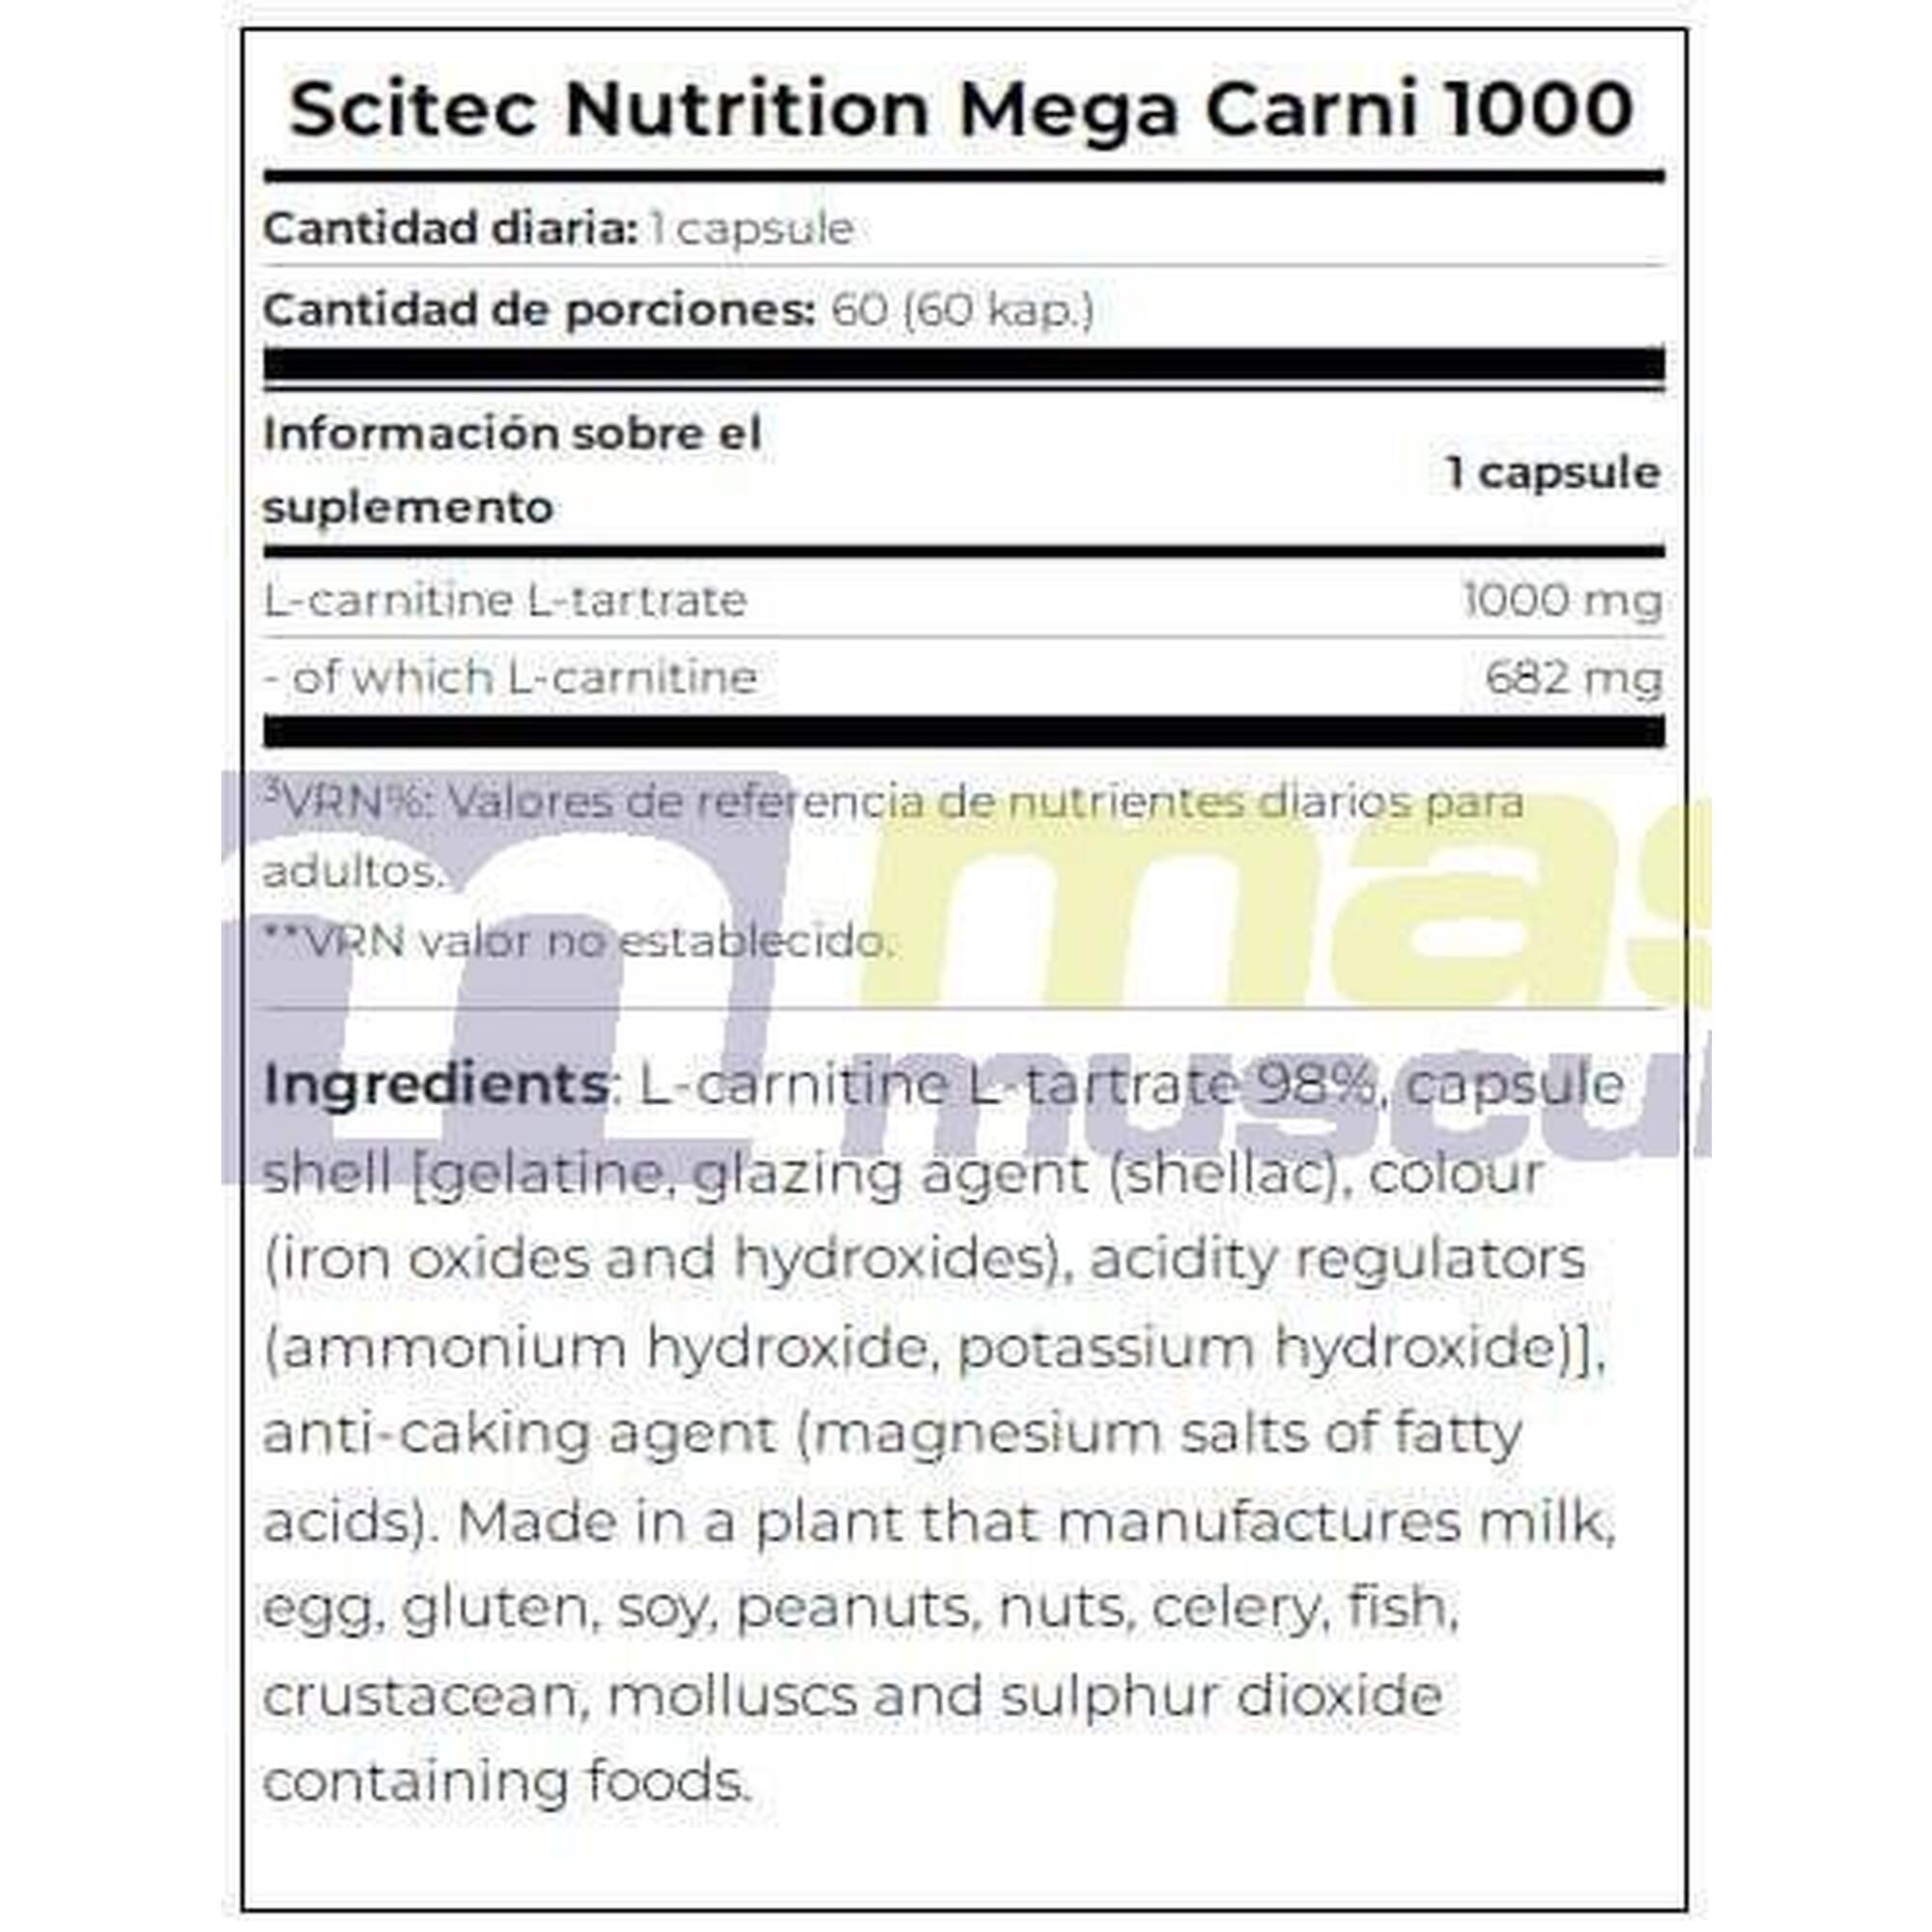 Scitec Nutrition Mega Carni-X 60 caps